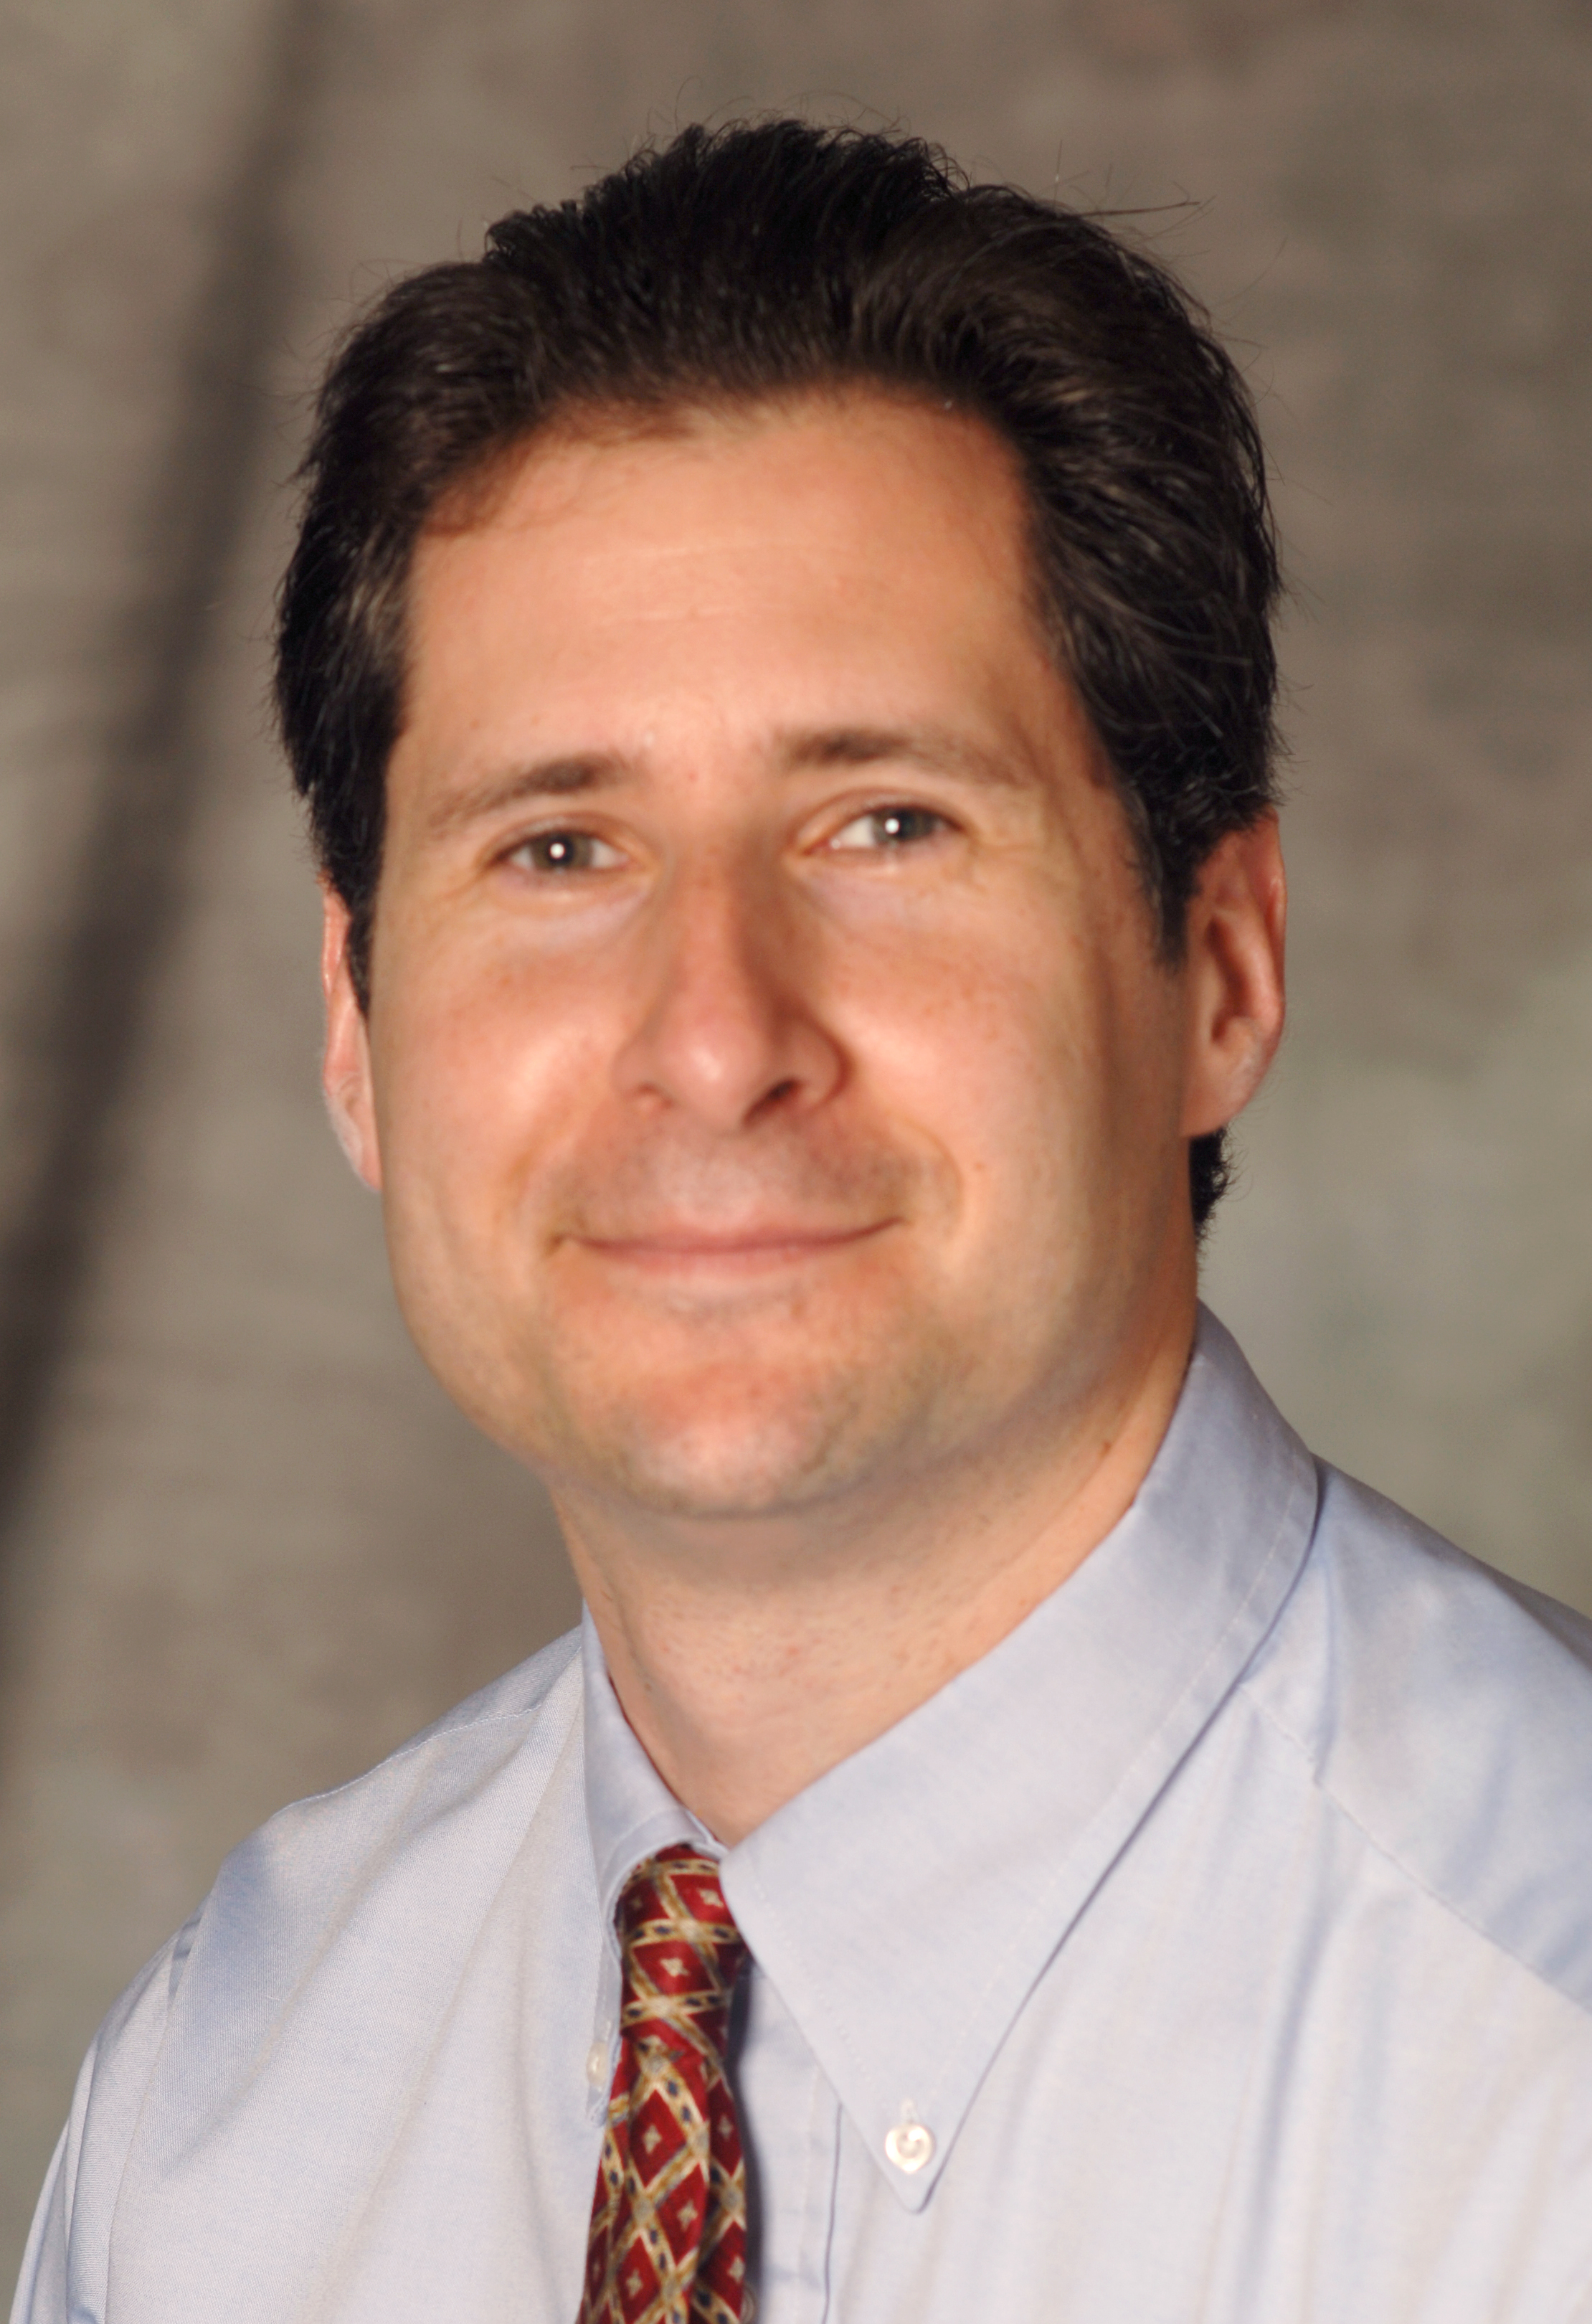 Richard Haspel, MD, PhD